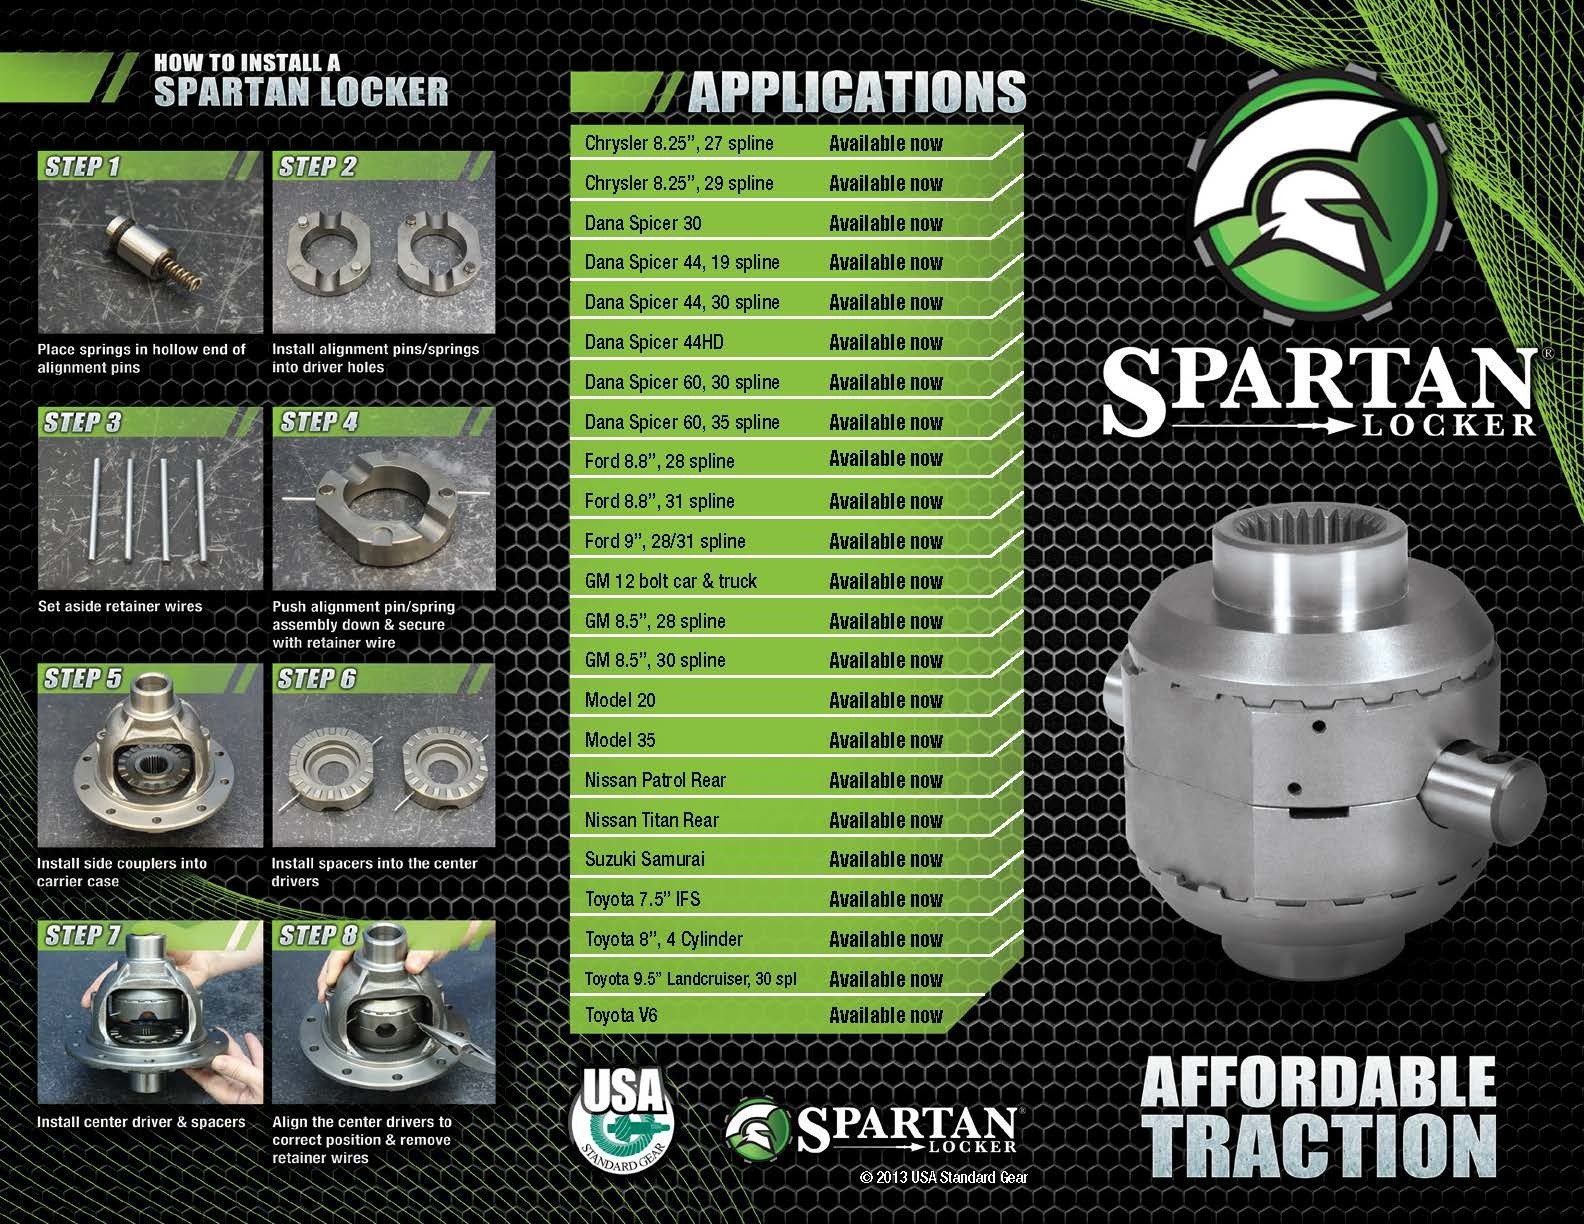 Spartan Locker Spring & Pin Kit for LRG Dana 60 differential